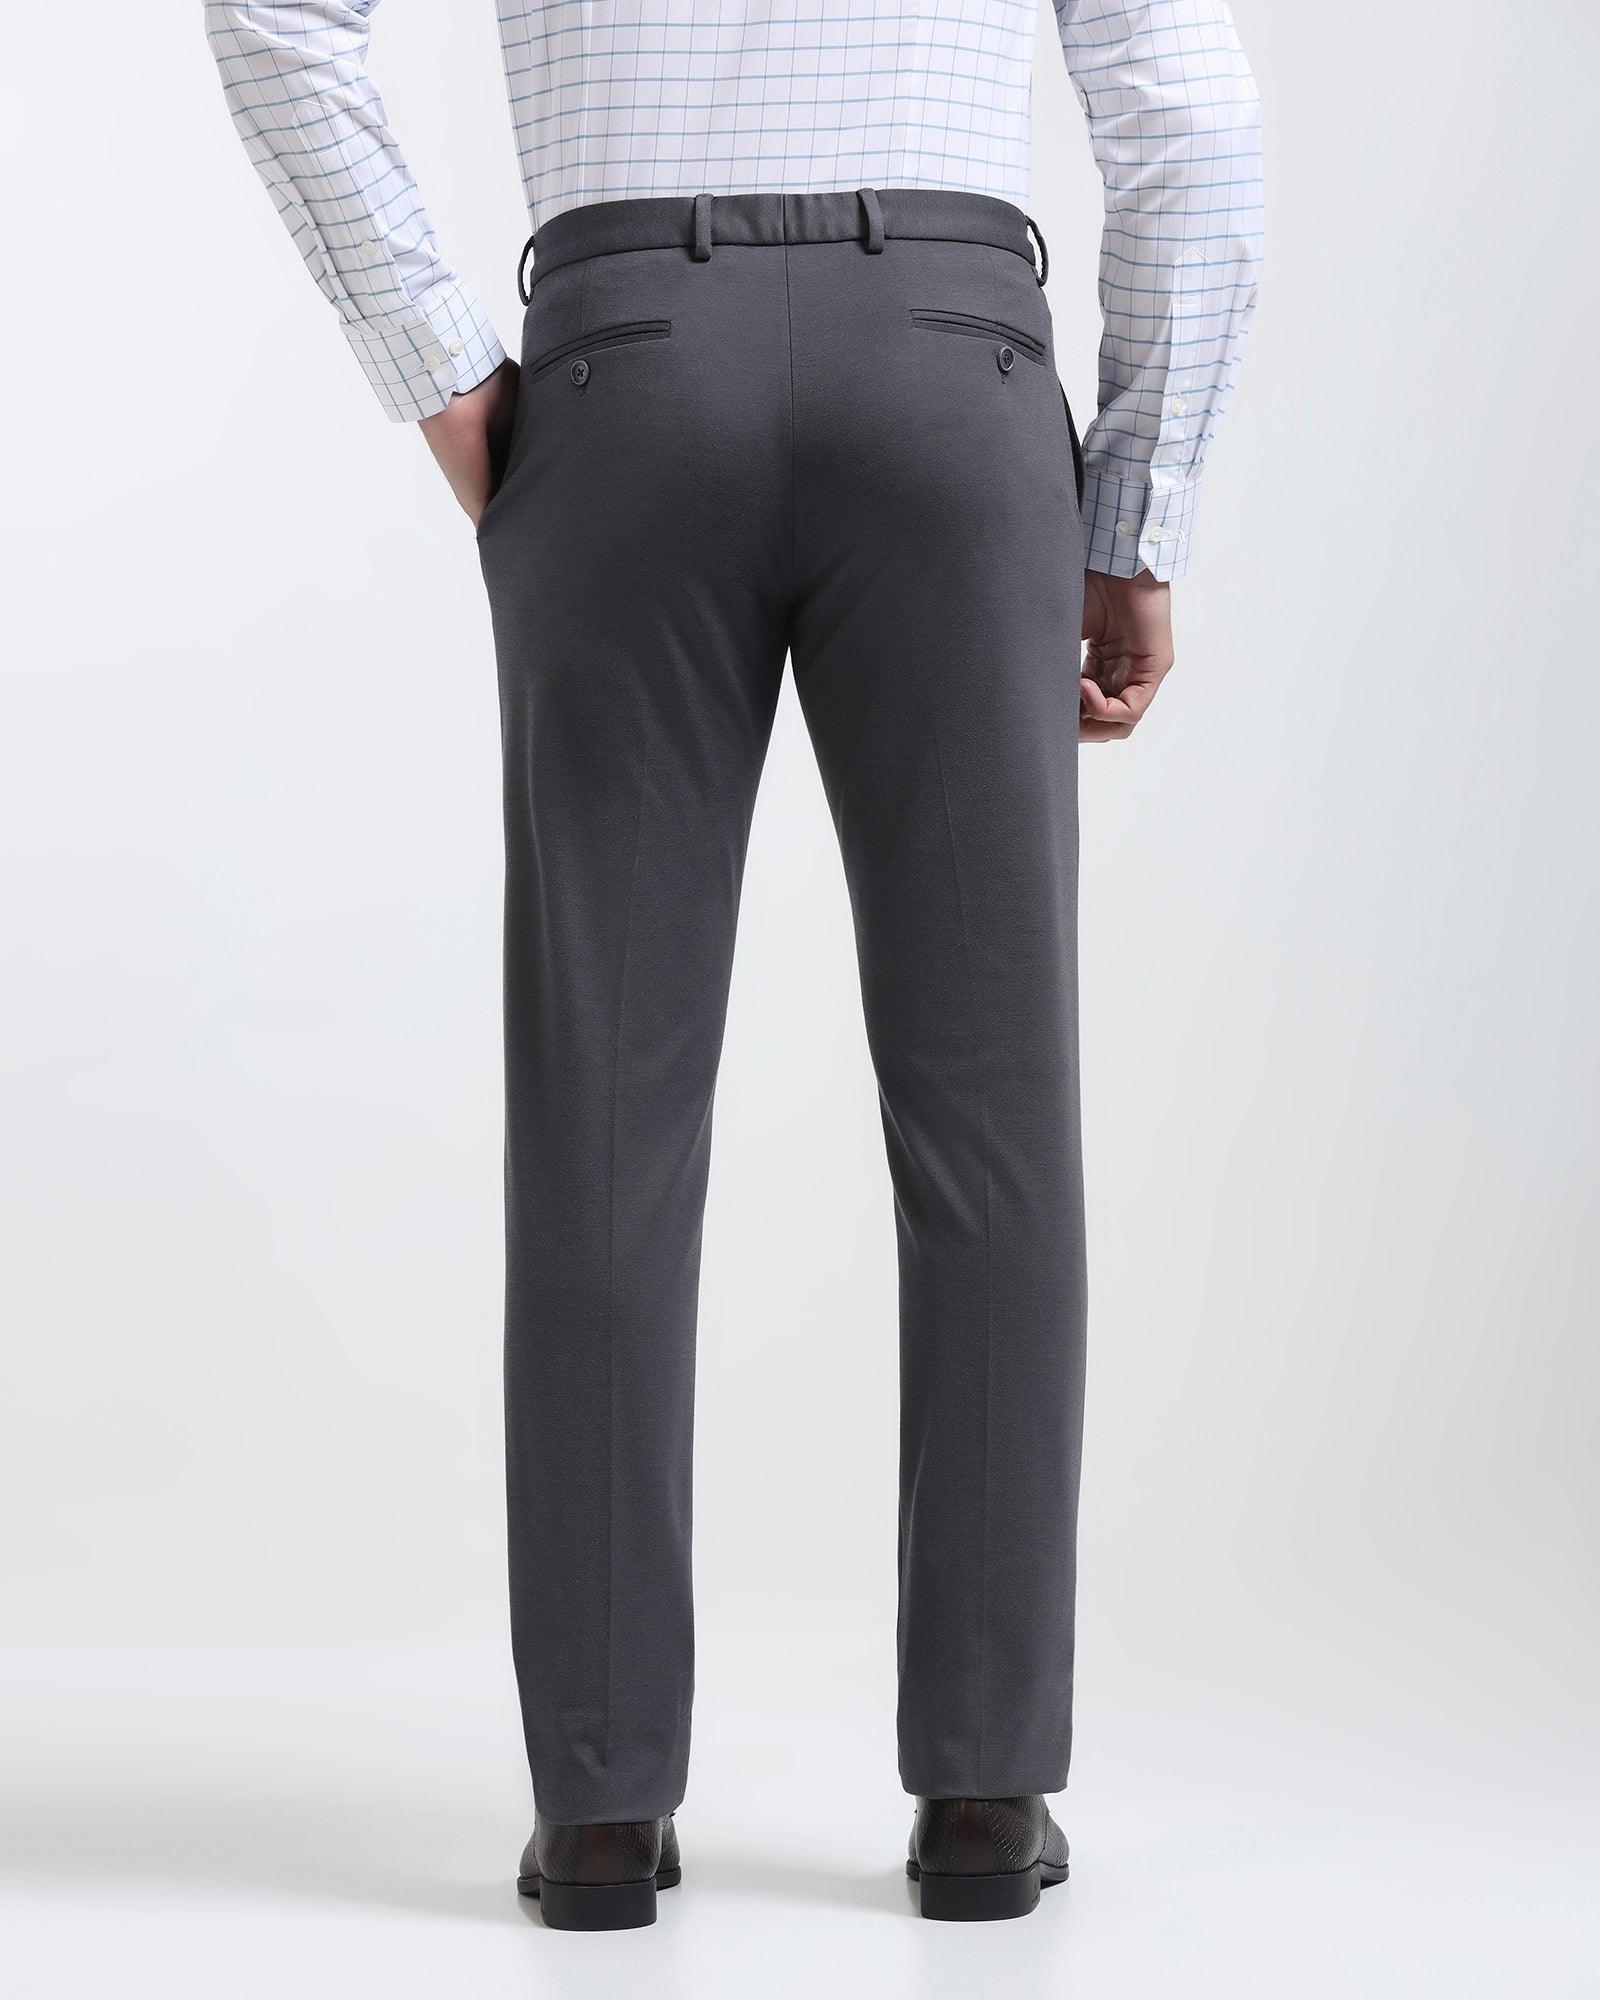 Formal Trouser: Check Men Dark Grey Cotton Blend Formal Trouser at Cliths